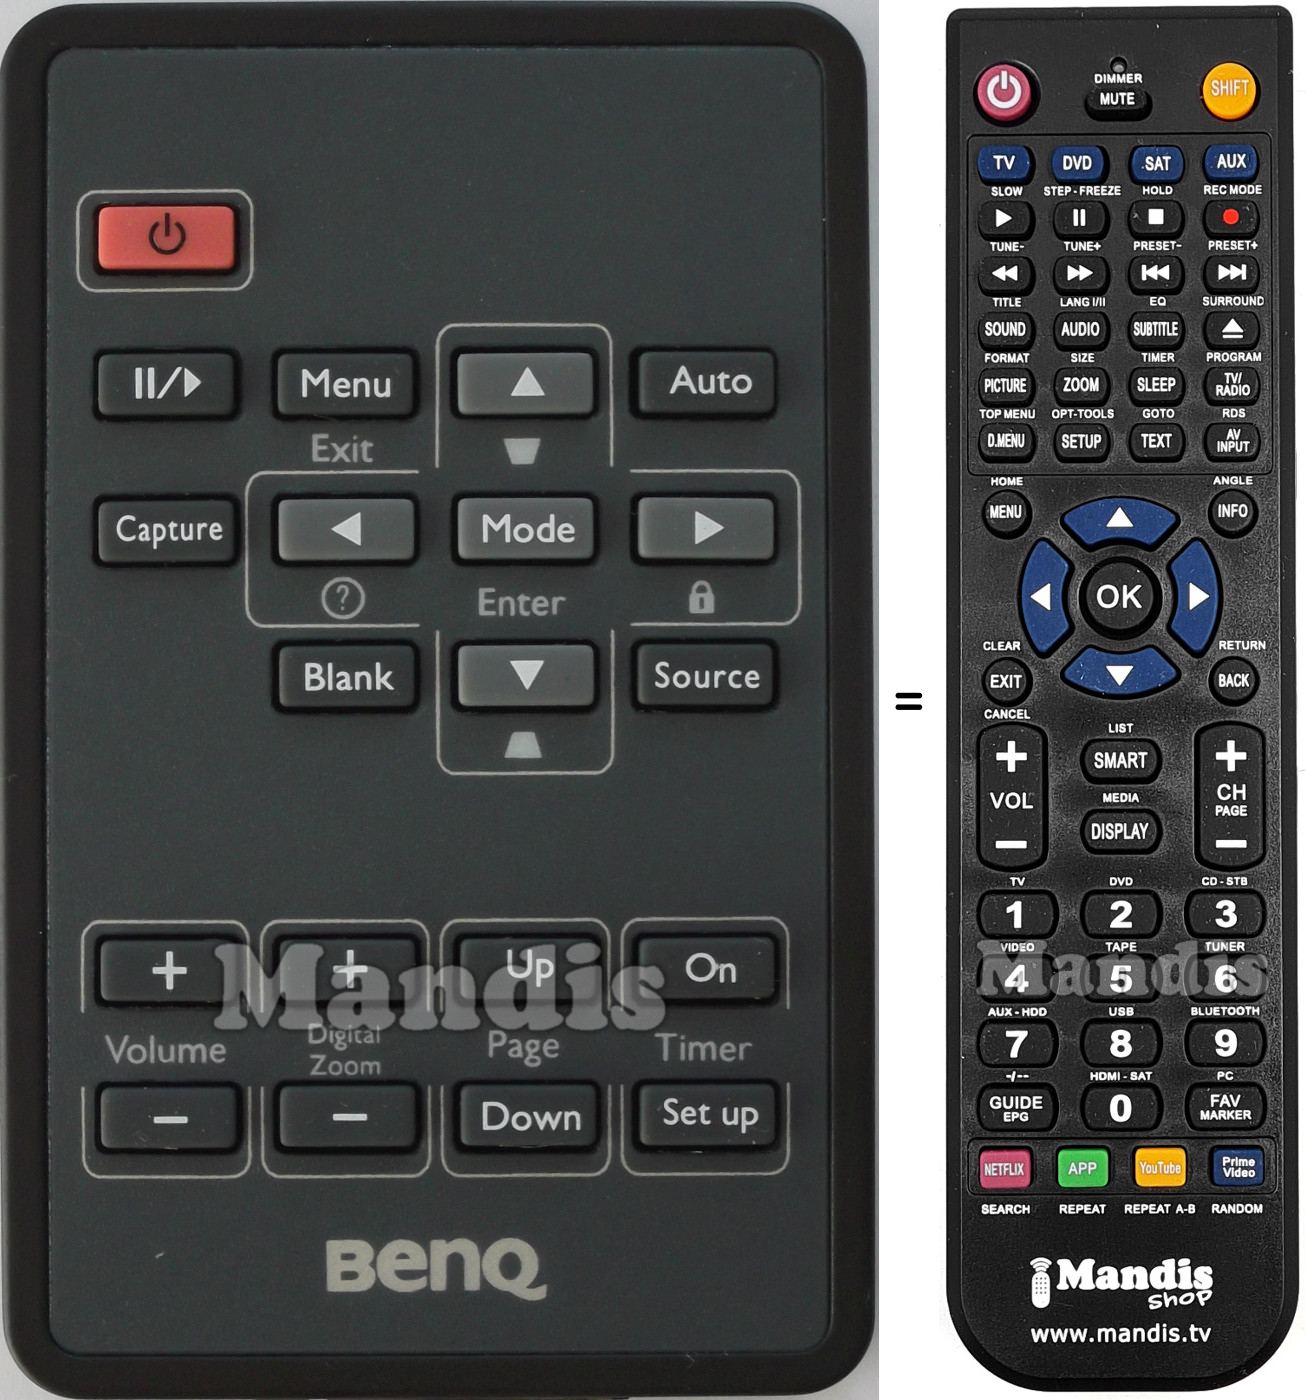 Replacement remote control Benq BENQ001